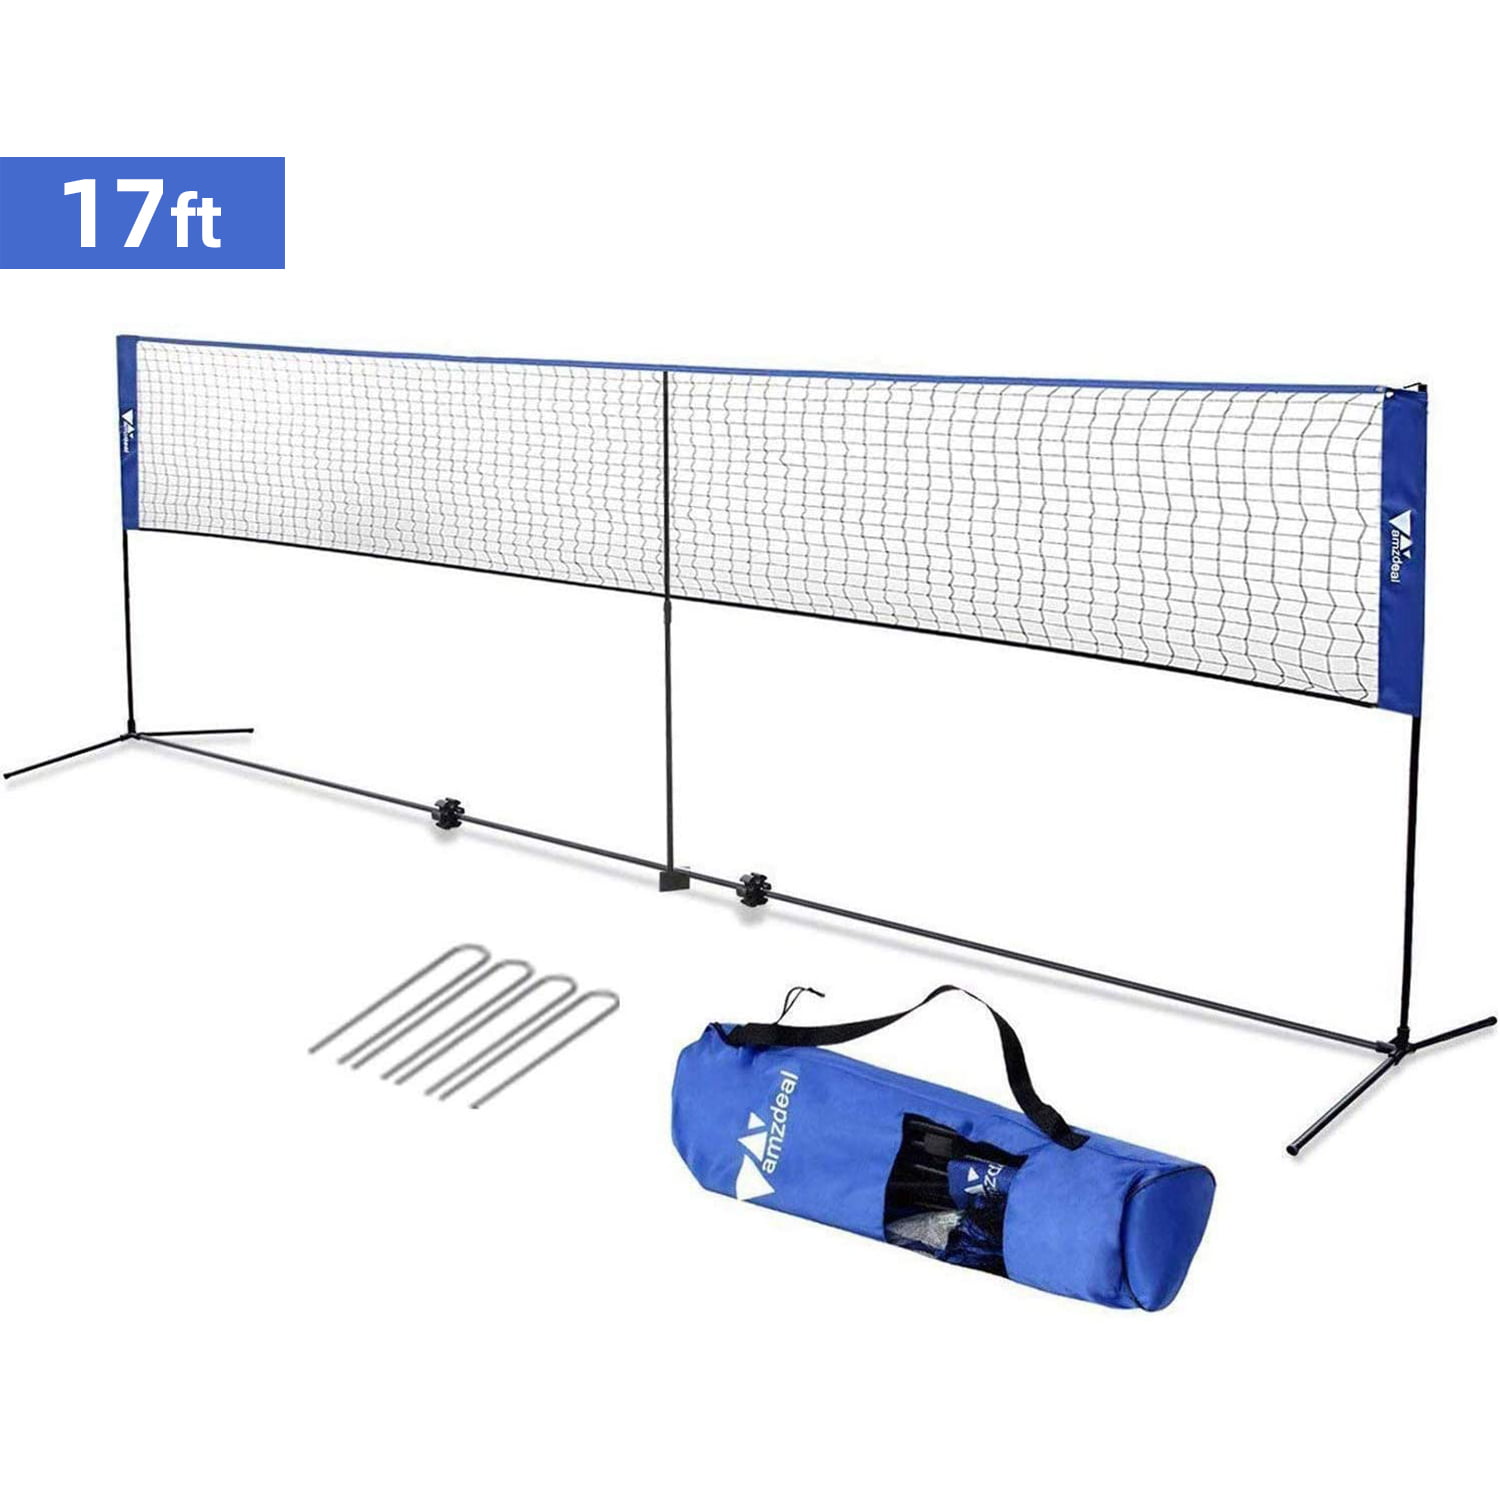 Portable Badminton Set Folding Tennis Badminton Volleyball Net 